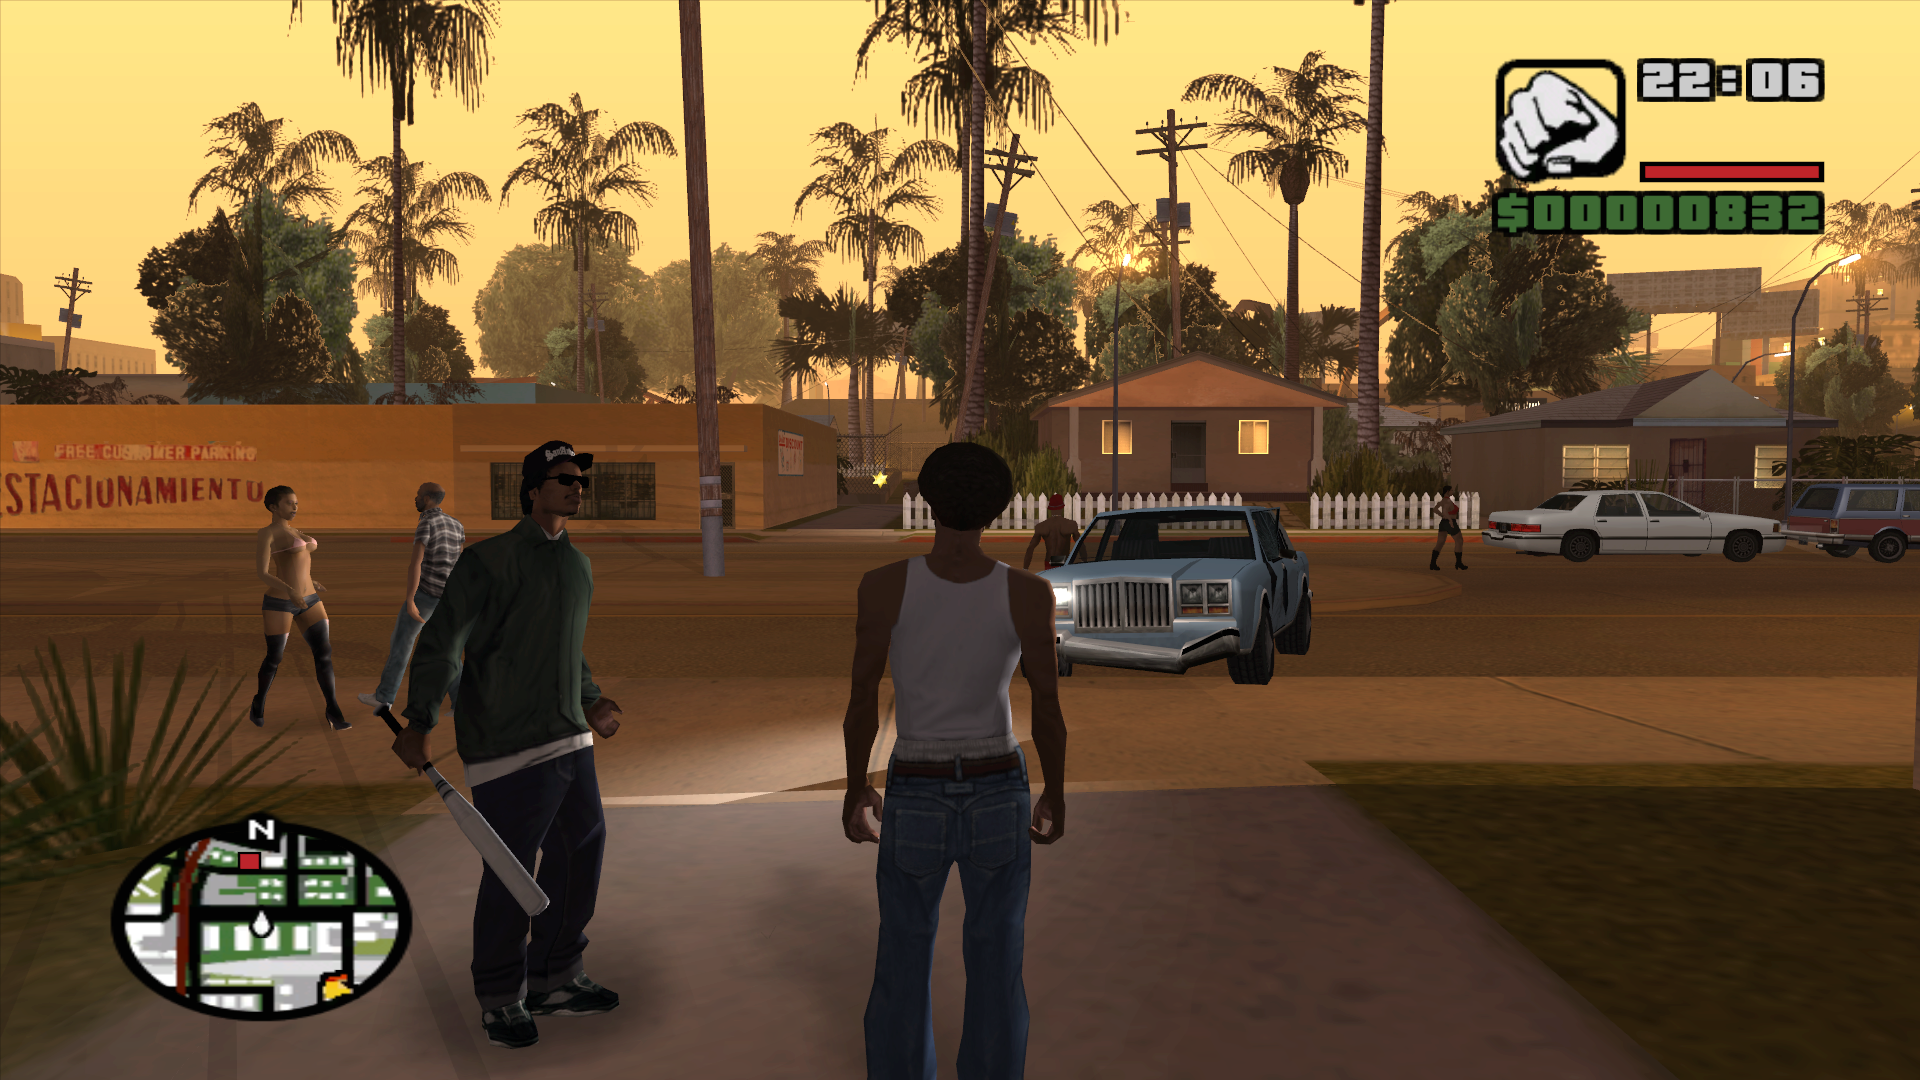 Игра гта оригинал на андроид. Grand Theft auto Сан андреас. Grand Theft Anto San Adreas. Grand Theft auto San Andreas Grand. Grand Theft auto: San Andreas 2.